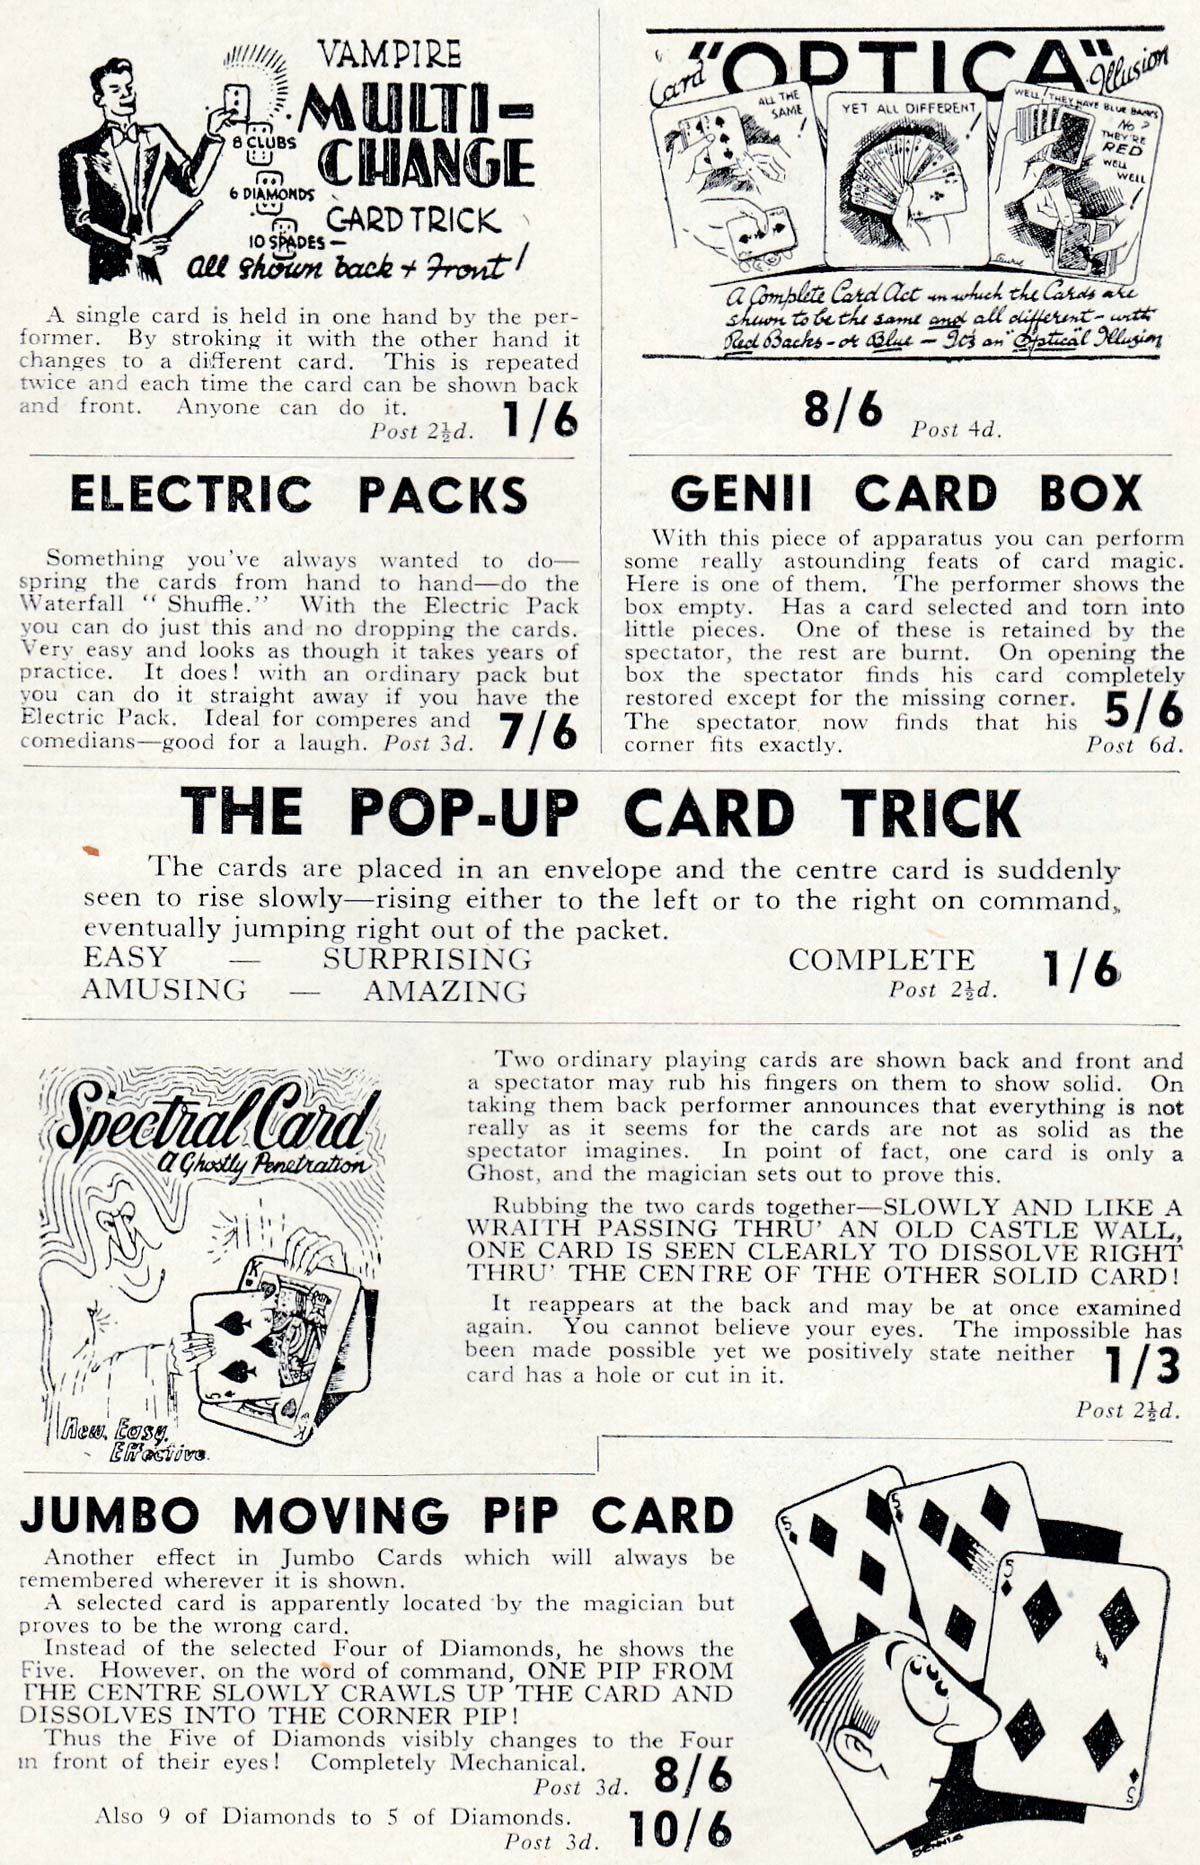 Gamagic Catalogue of Magic Card Tricks, c.1940